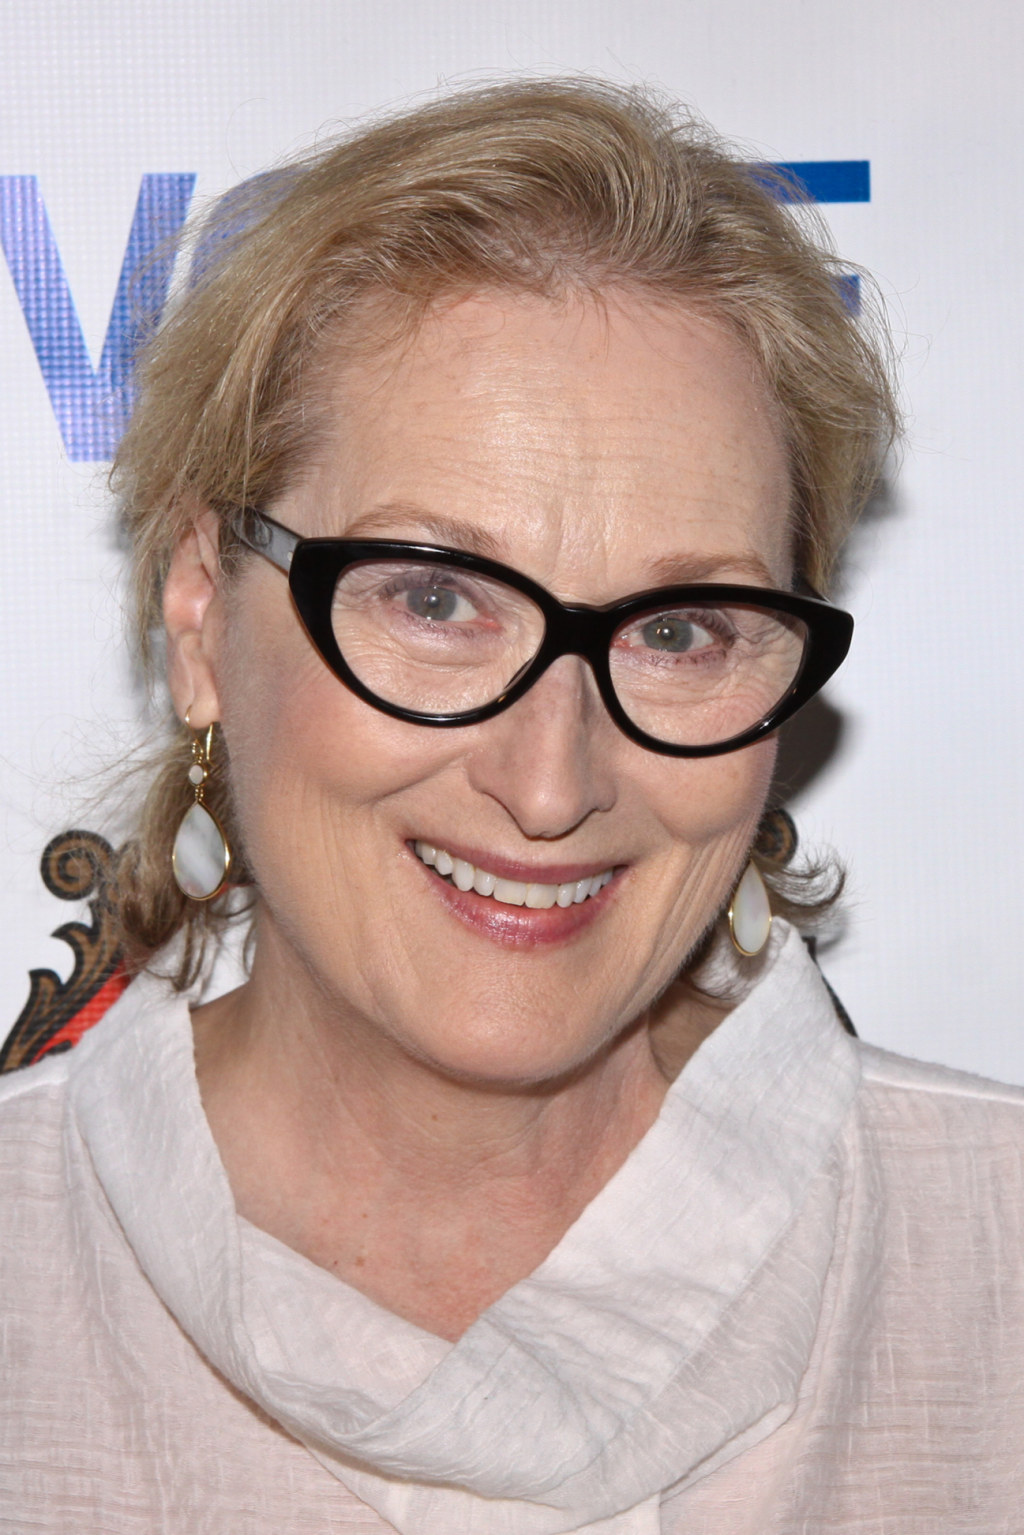 Meryl Streep photo 306 of 492 pics, wallpaper - photo #654668 - ThePlace2